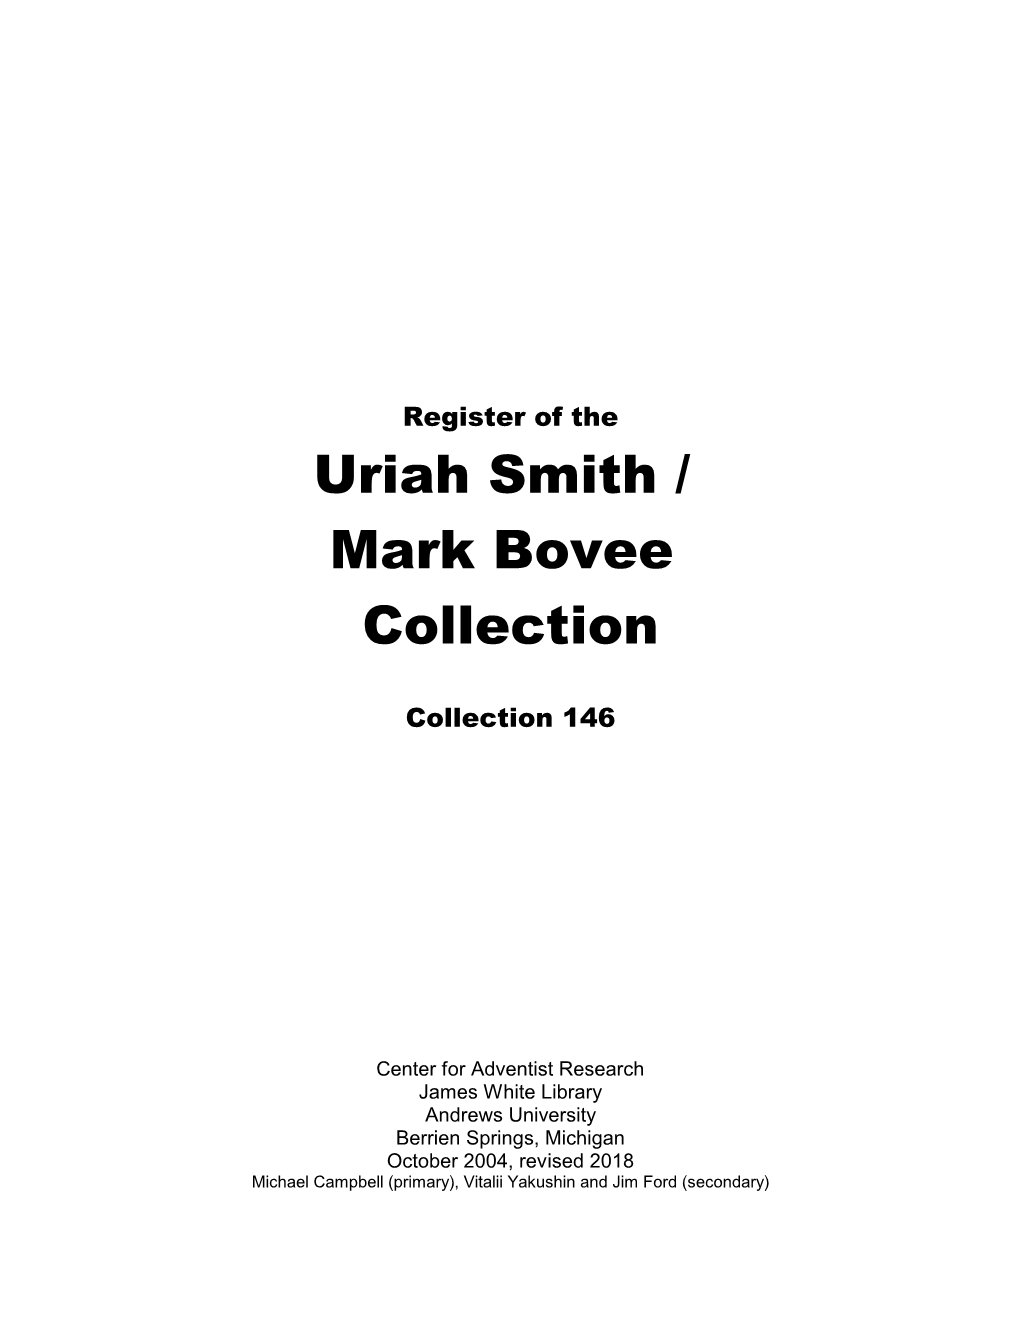 Uriah Smith / Mark Bovee Collection